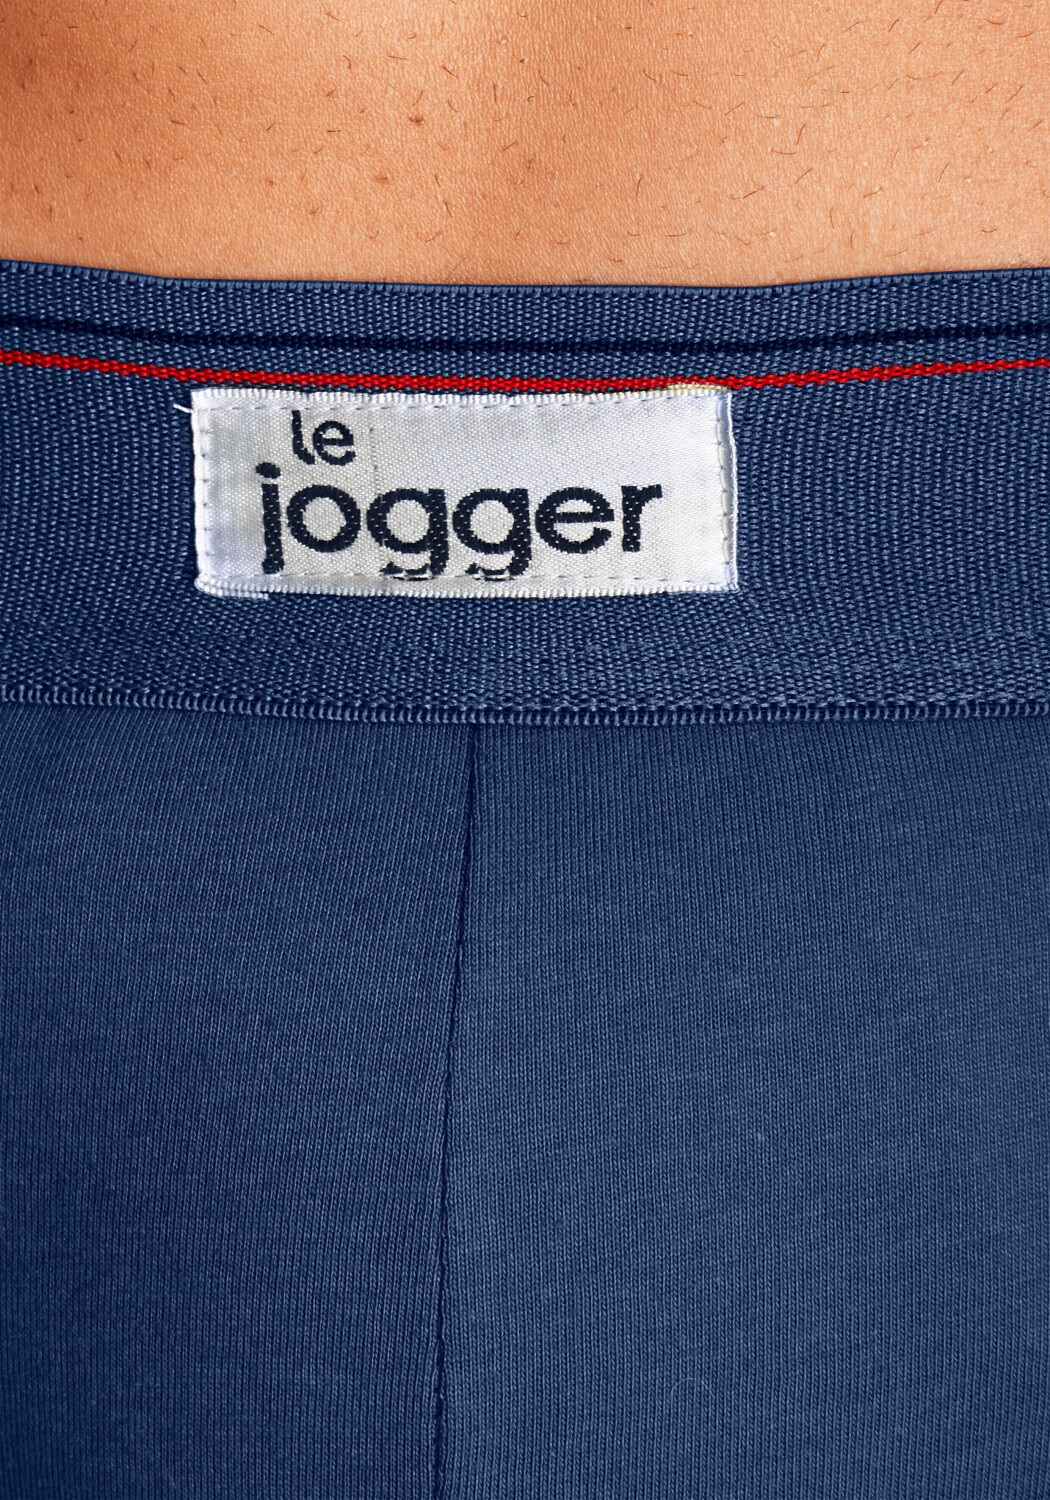 Le Jogger 10-Pack Slips multicolour ab 27,00 € | Preisvergleich bei